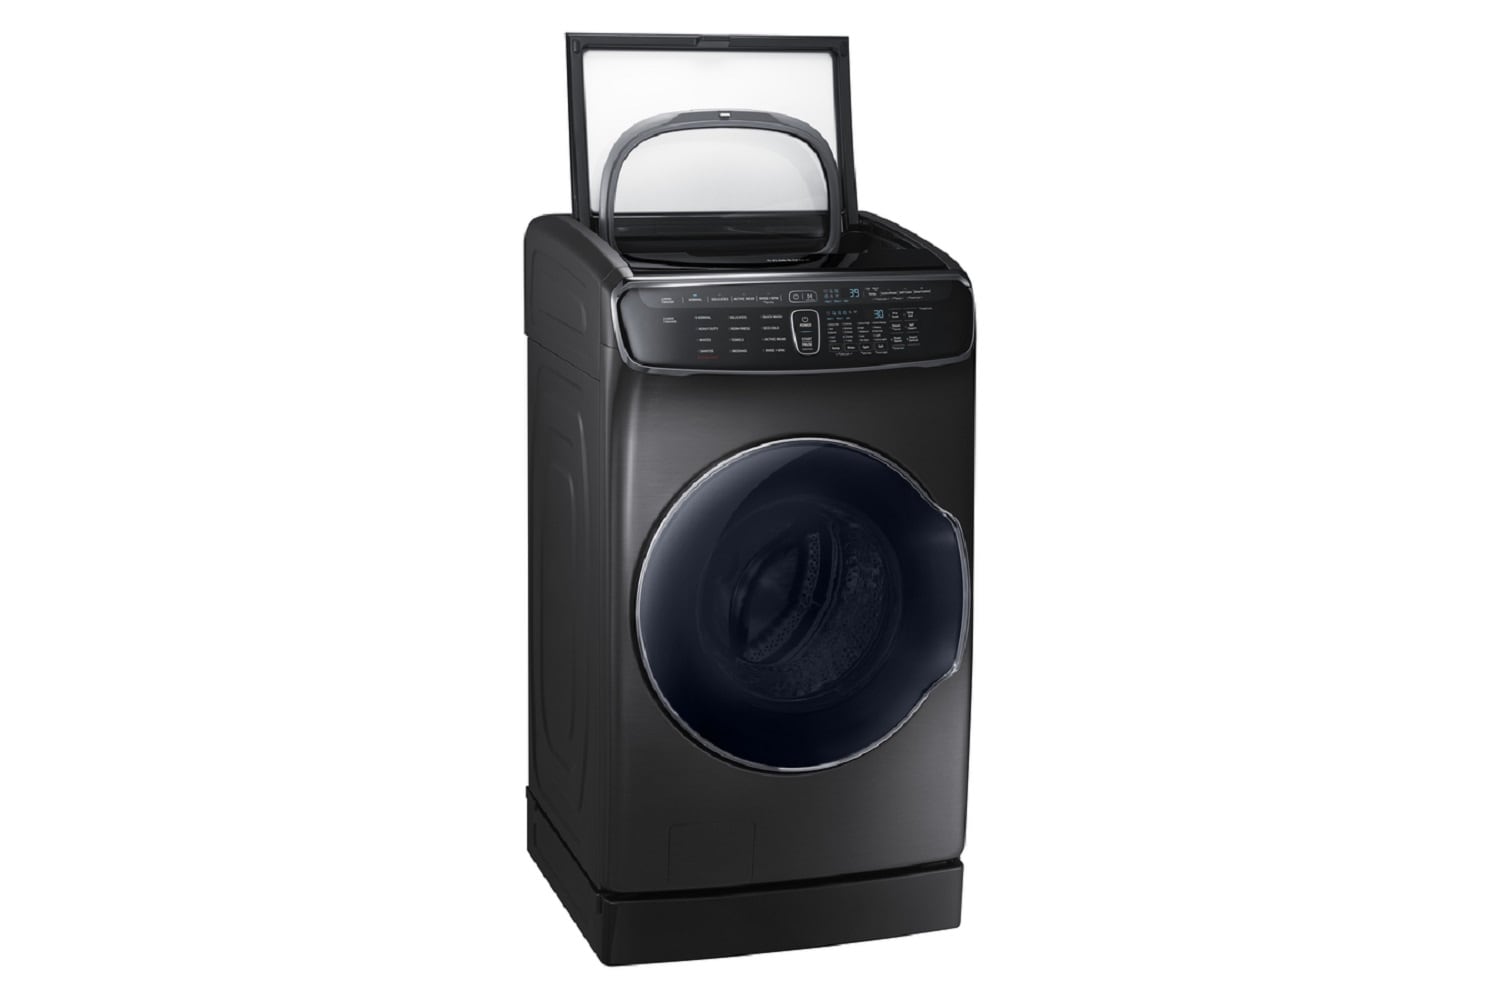 WV60M9900AV/A5  6.0 cu ft. Smart Washer with Flexwash in Black